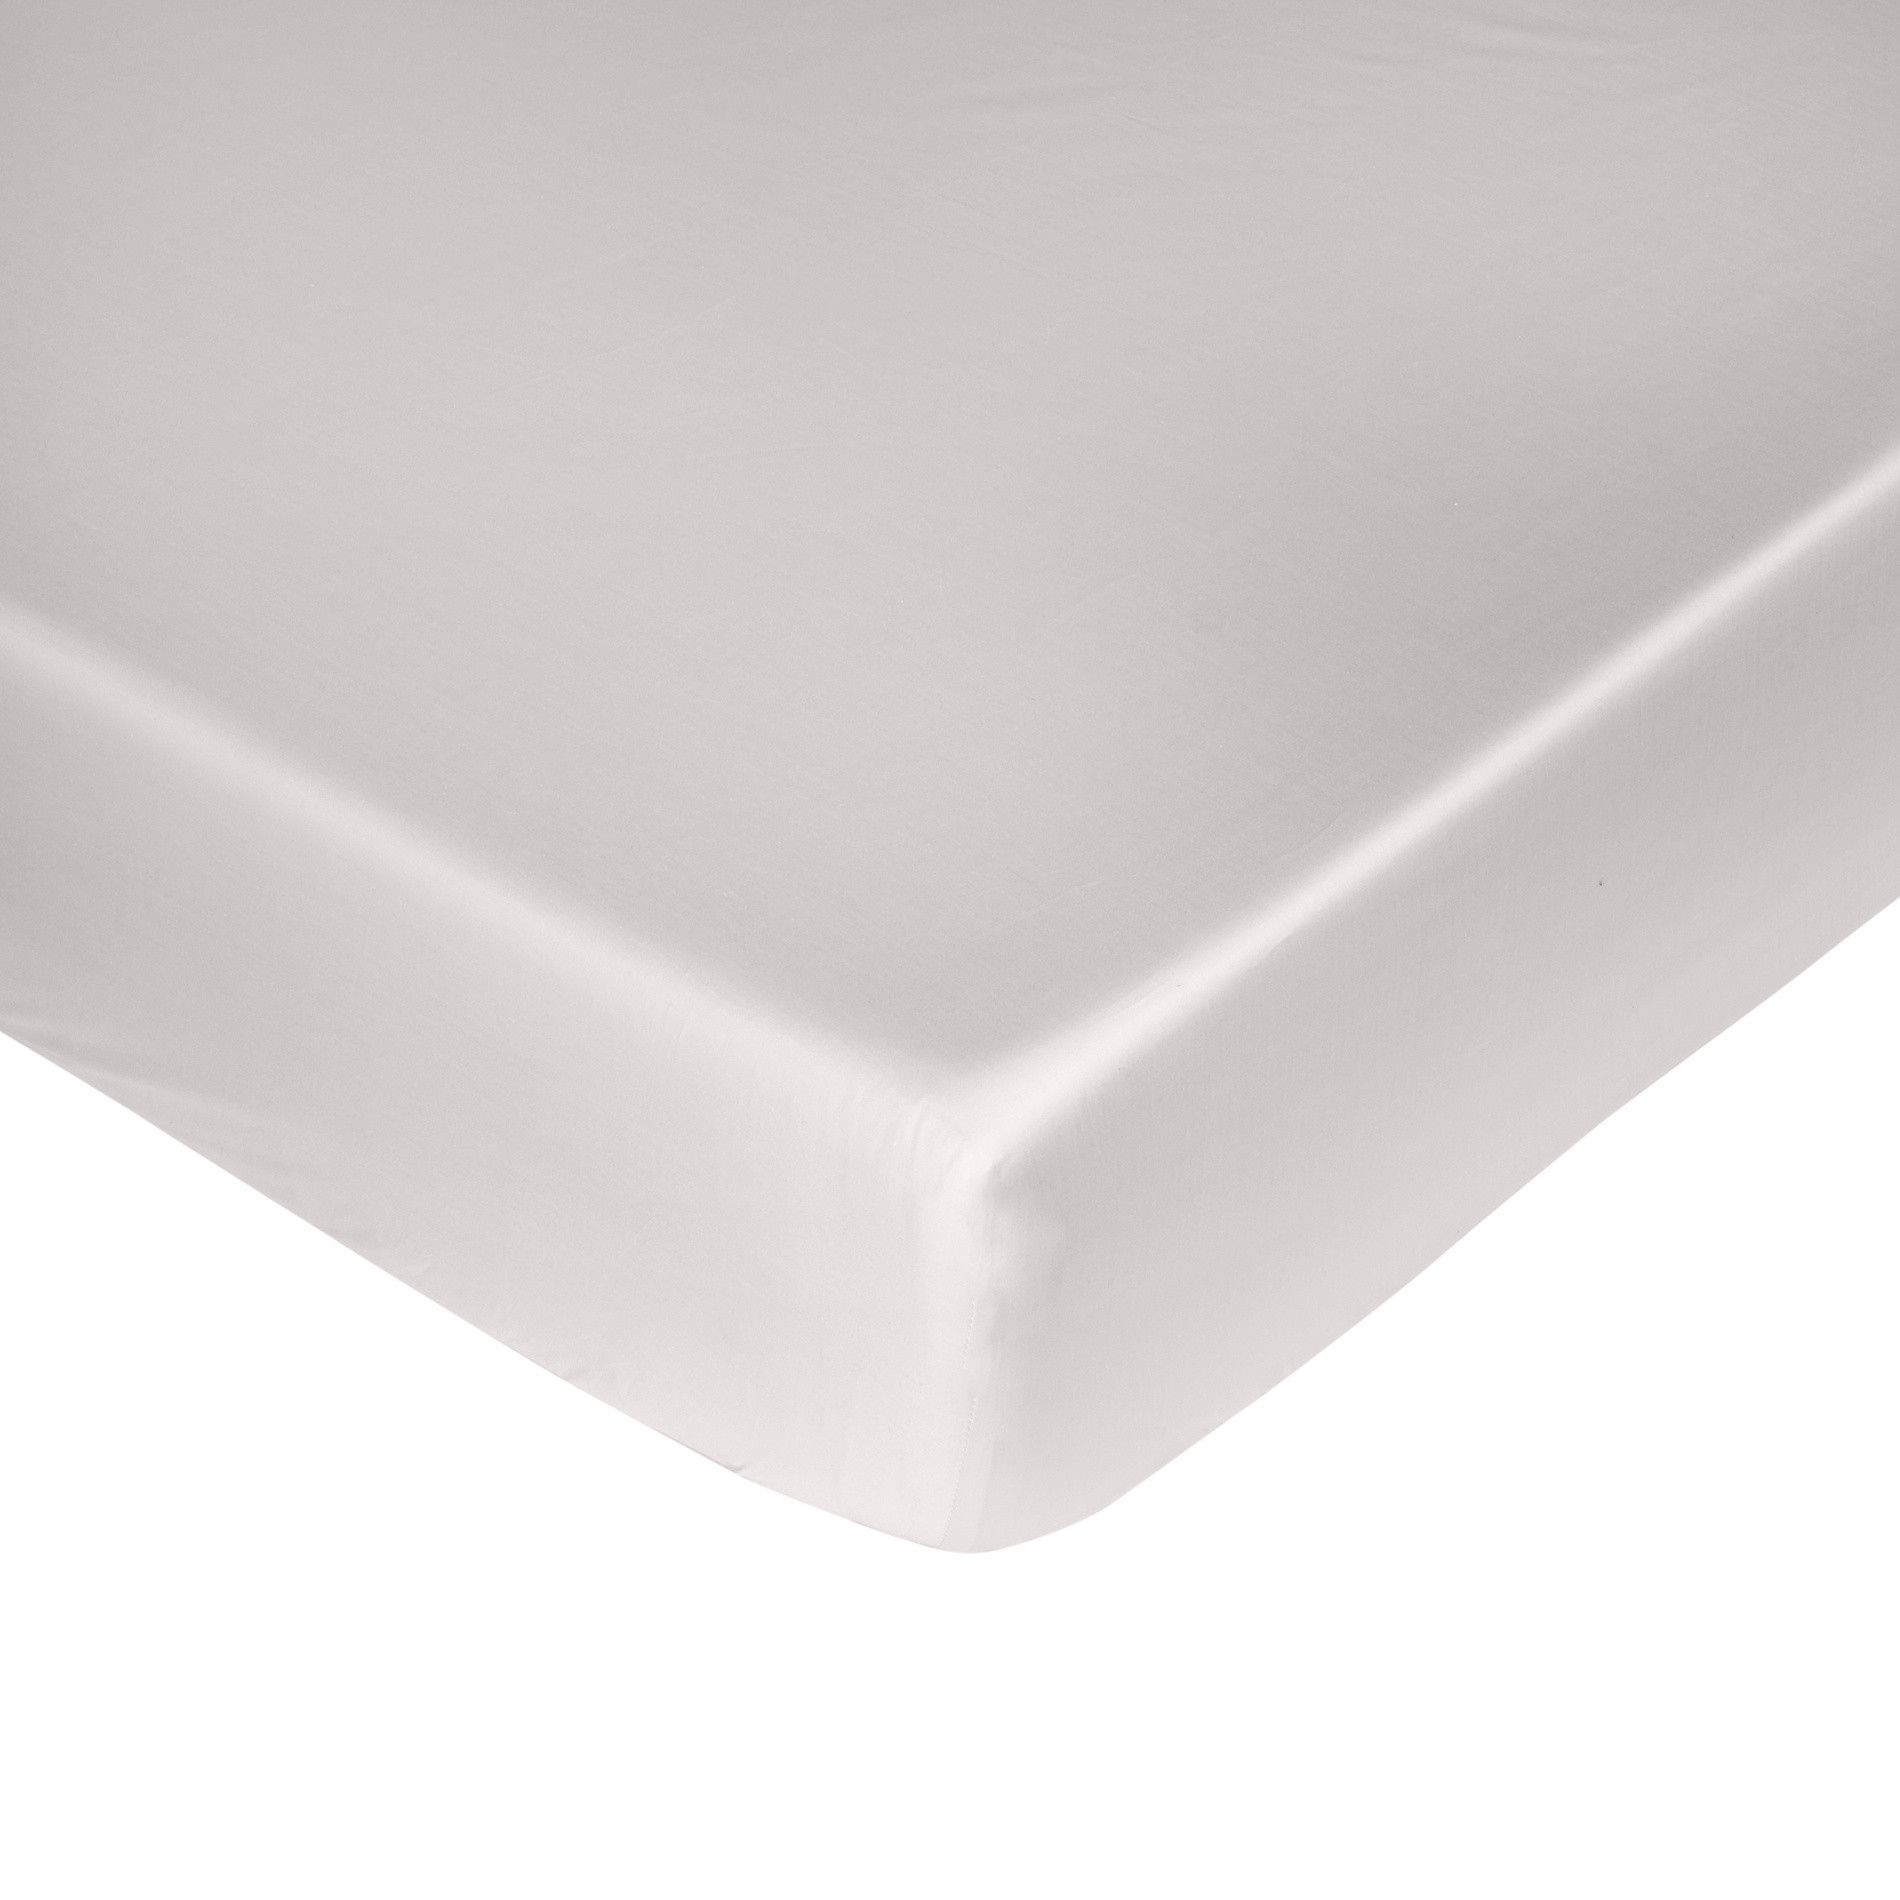 Thermae flat sheet in TC400 satin cotton, Light Grey, large image number 0